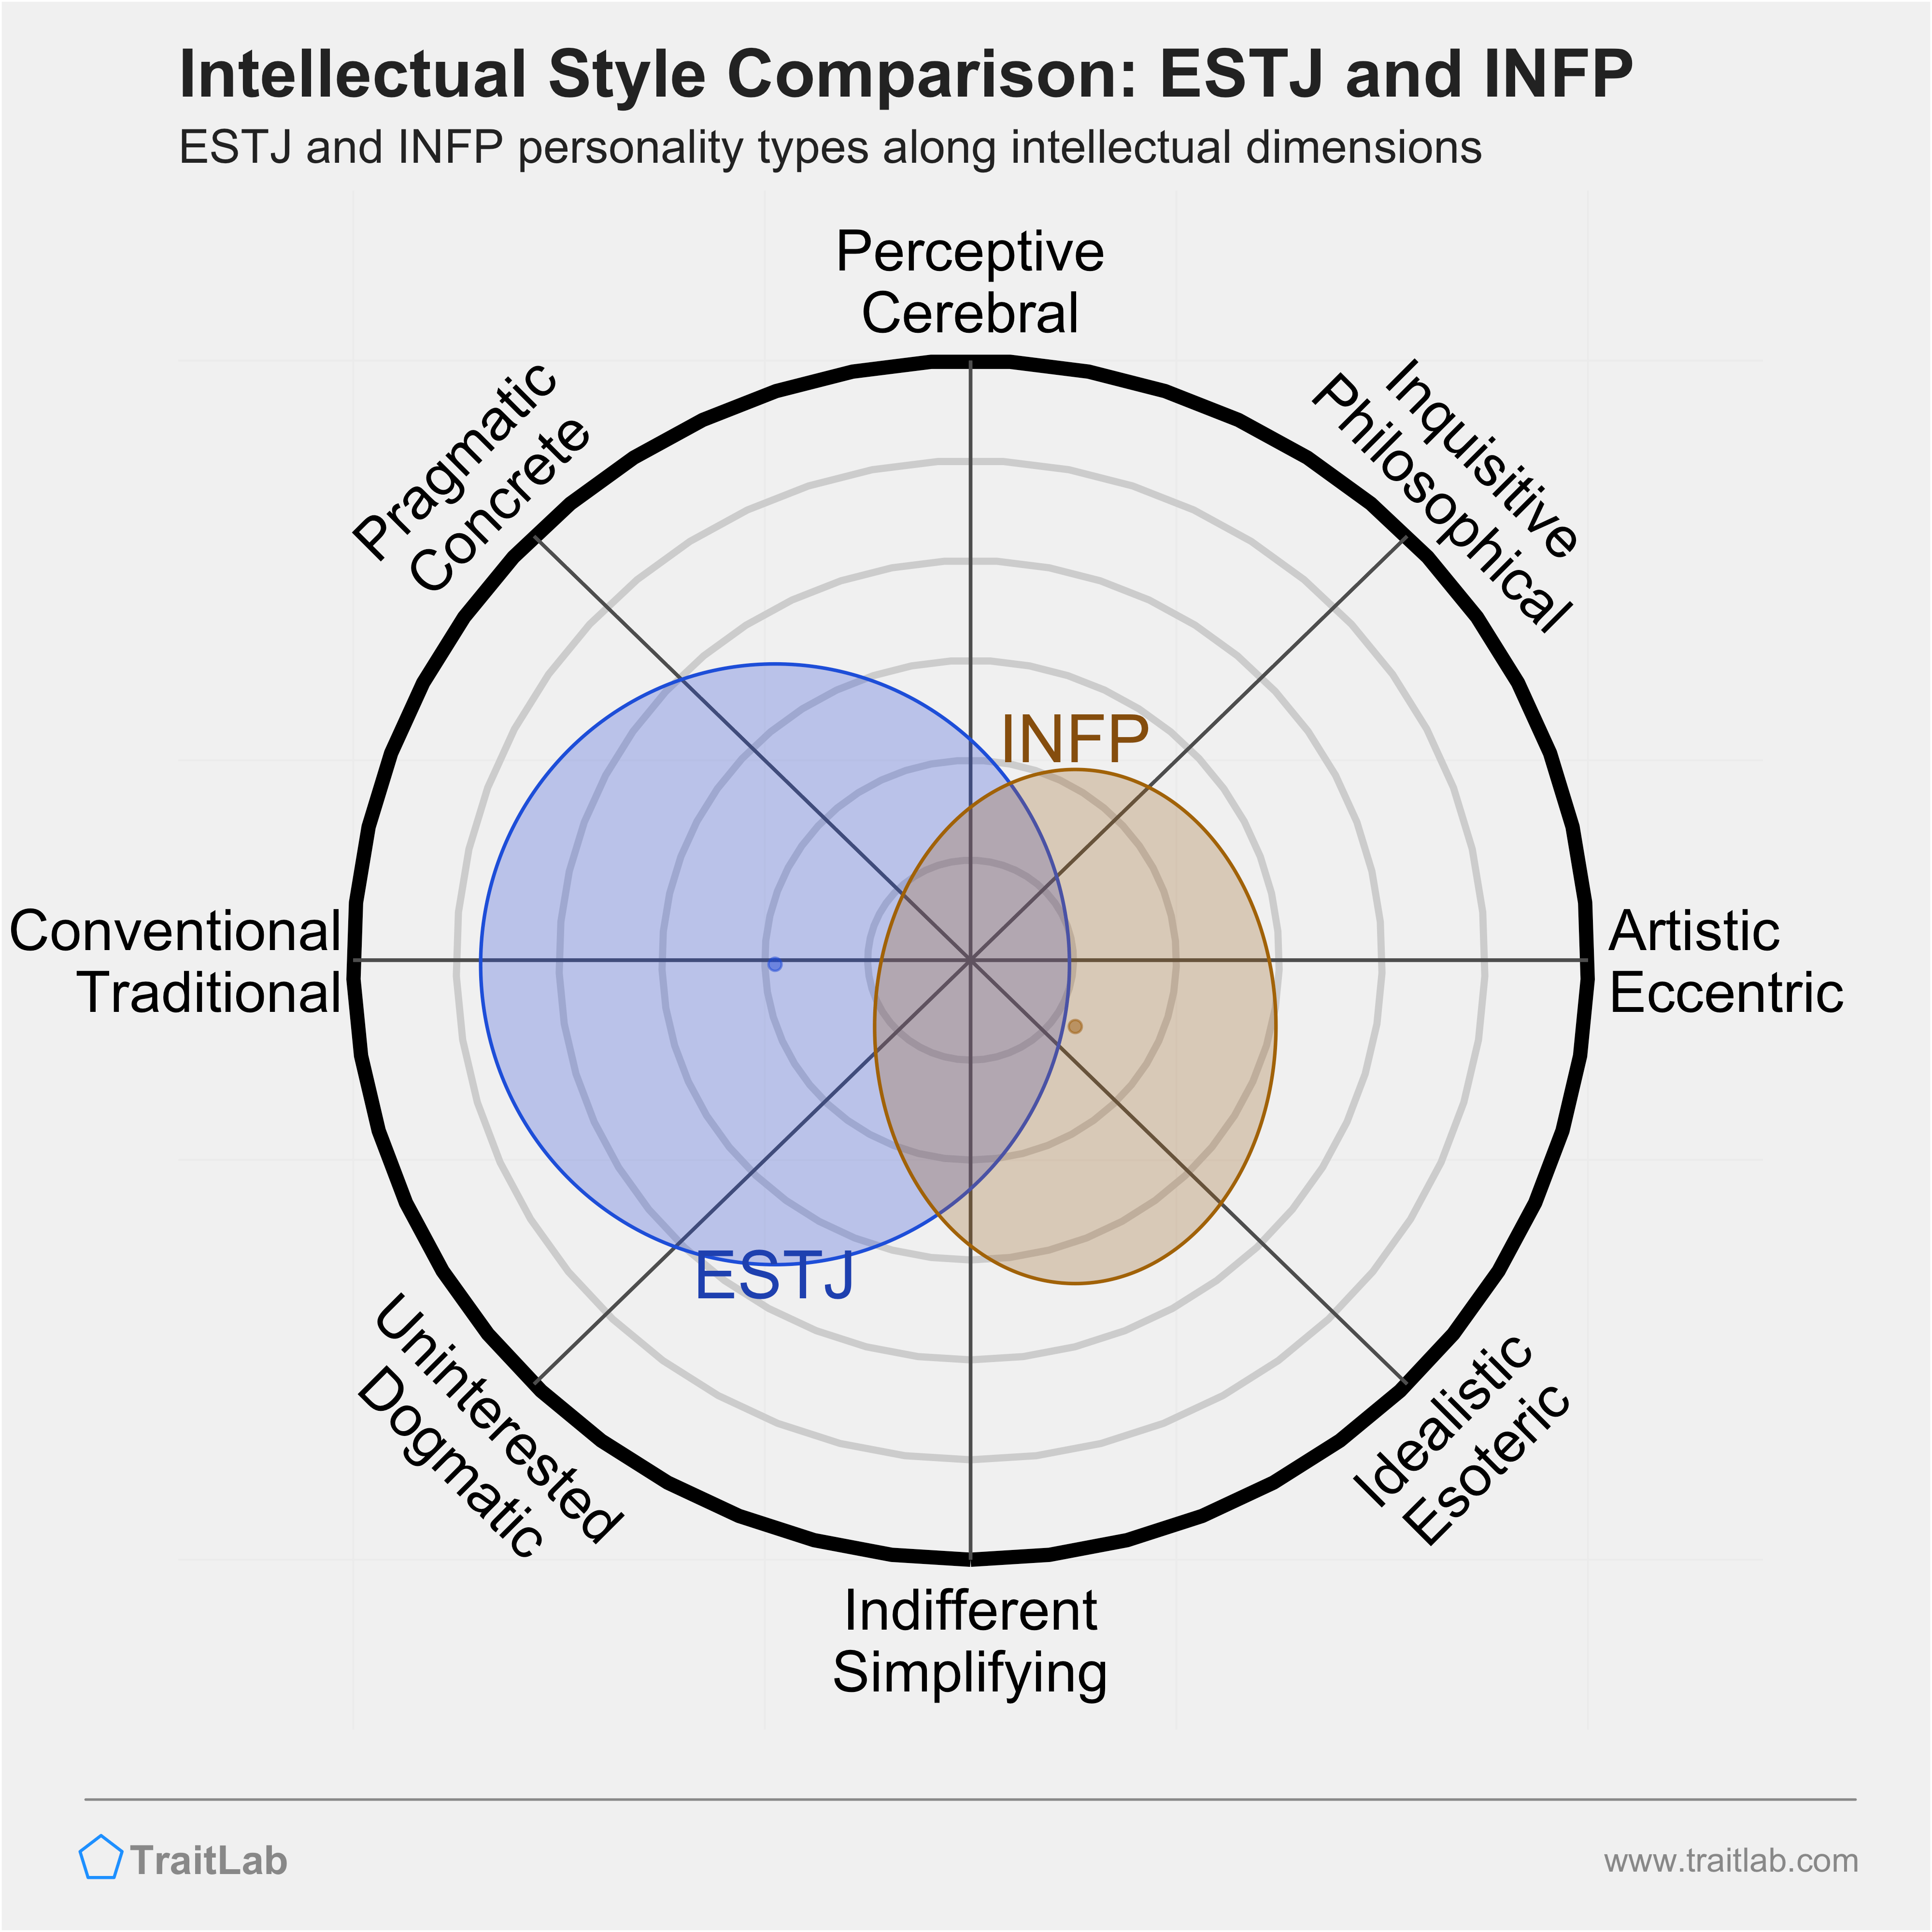 ESTJ and INFP comparison across intellectual dimensions